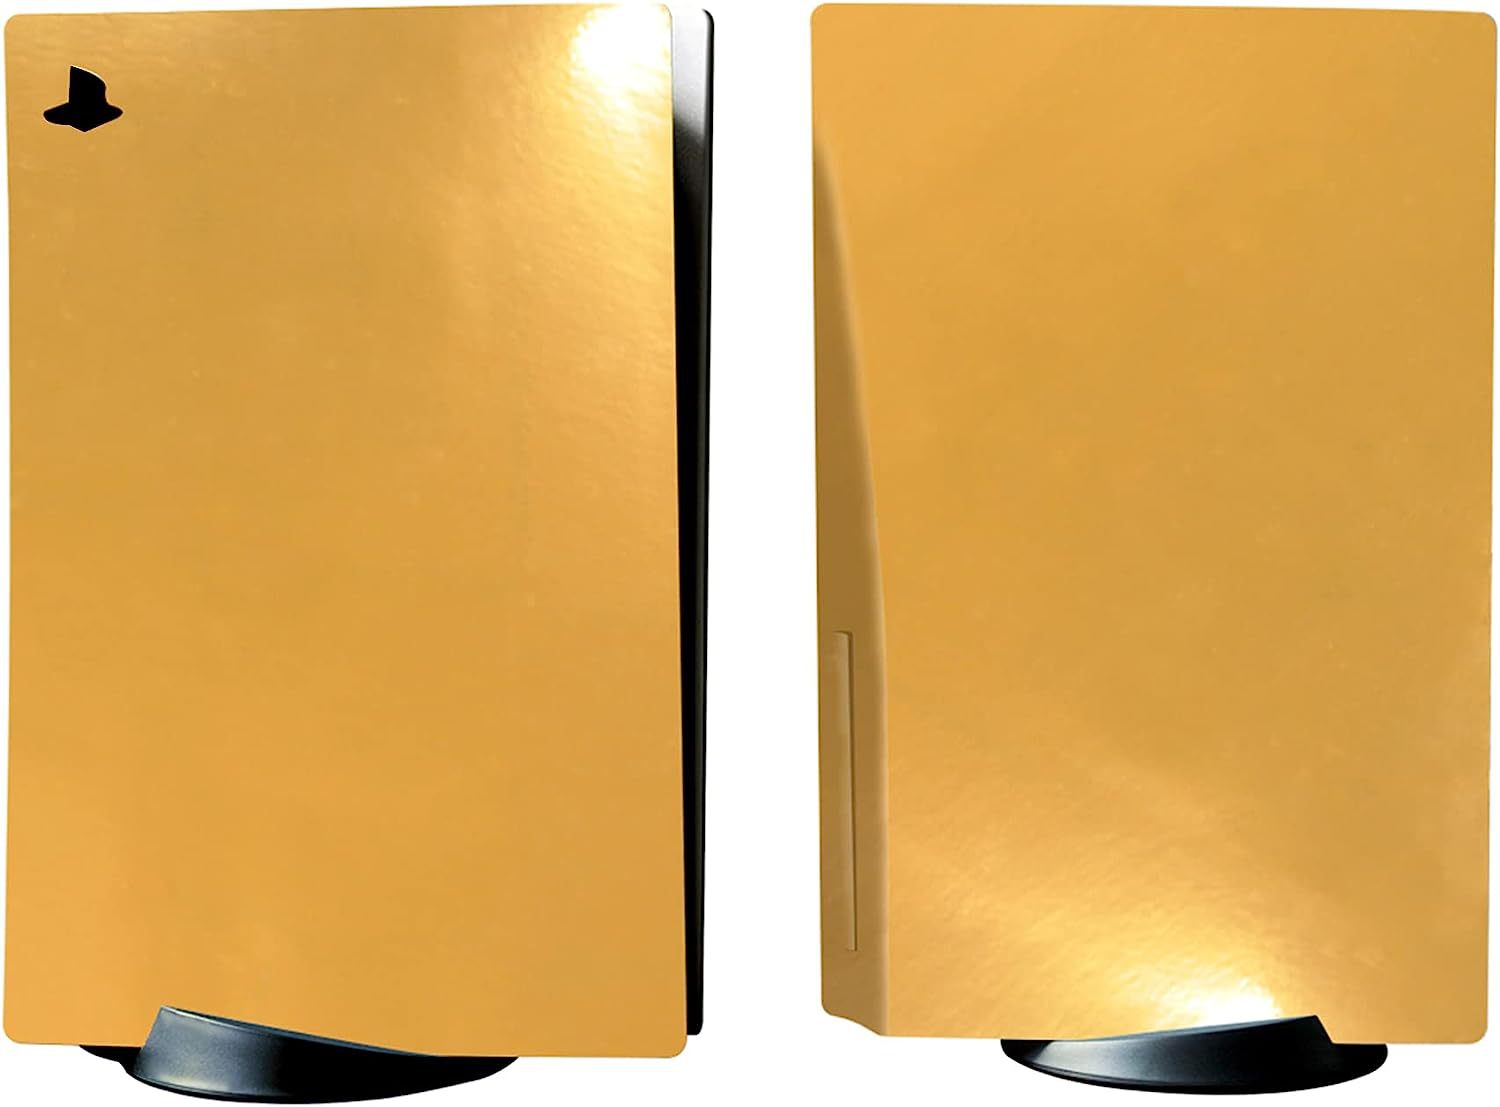 Ps5 Sticker Film Optical Drive Version Digital Version Electric Gold Gold Spot Gold Chrome Skin